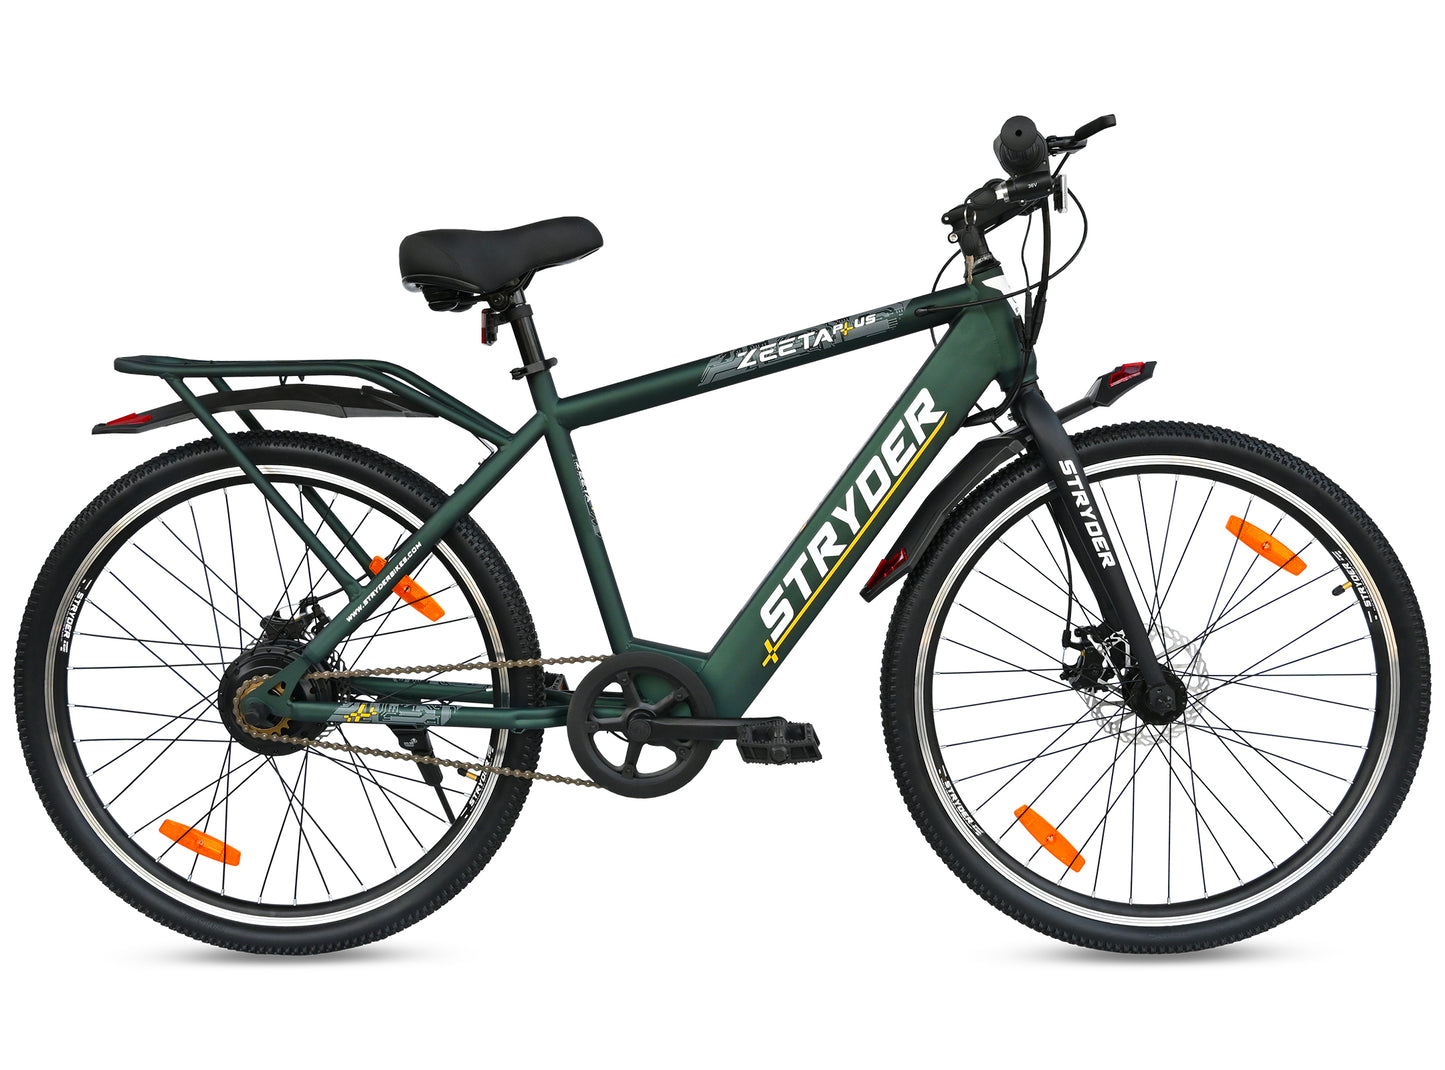 27.5 Zeeta Plus IC Electric Bicycle